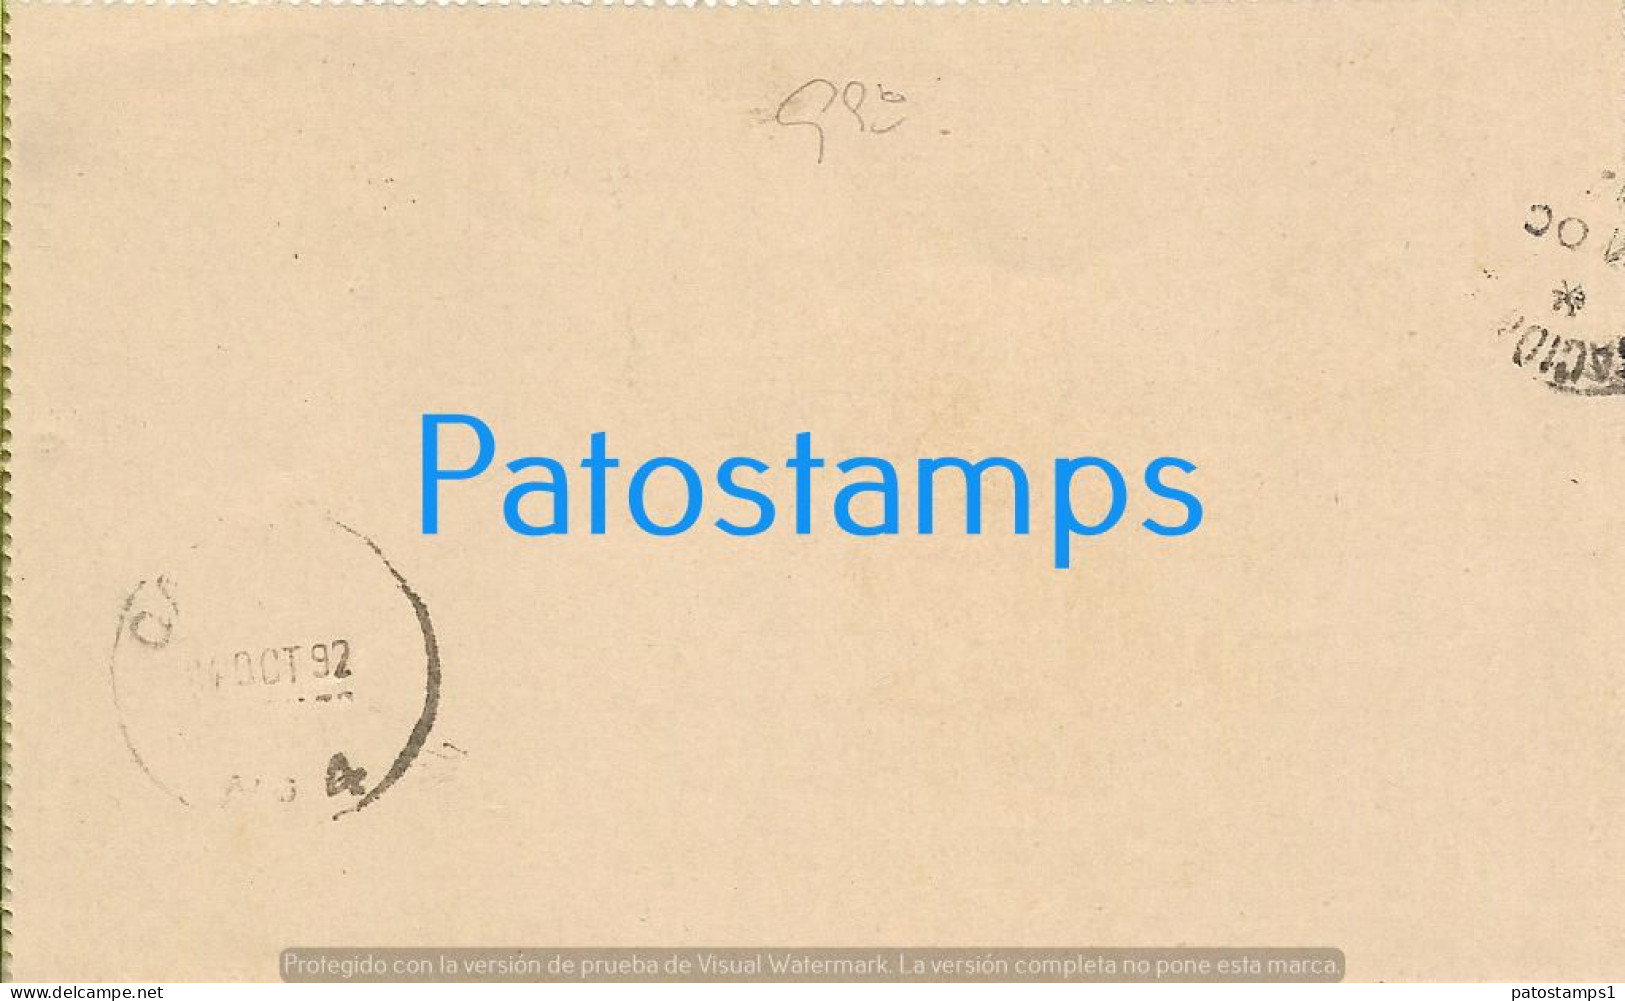 226195 ARGENTINA ESTACION MARGARITA CANCEL AMBULANT YEAR 1892 CIRCULATED TO SANTA FE POSTAL STATIONERY POSTCARD - Enteros Postales